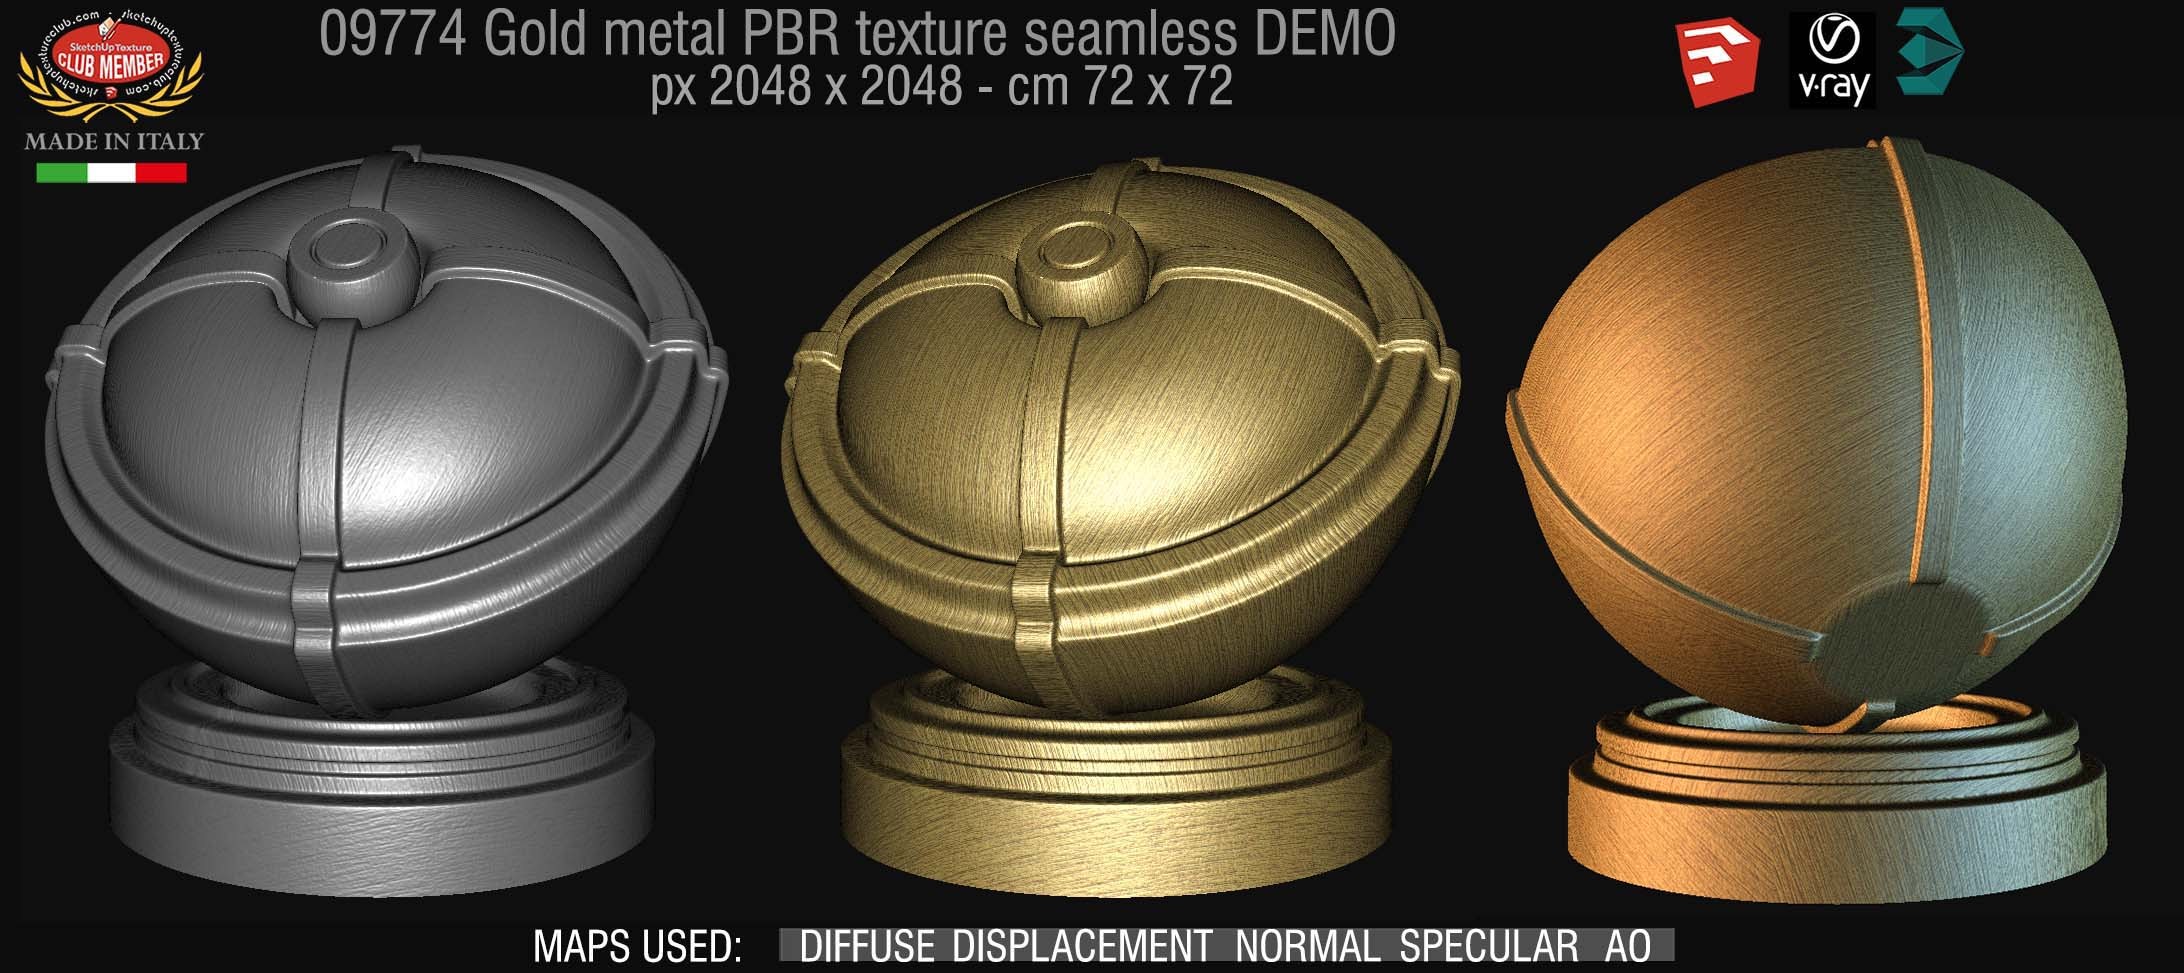 09774 Gold metal PBR texture seamless DEMO